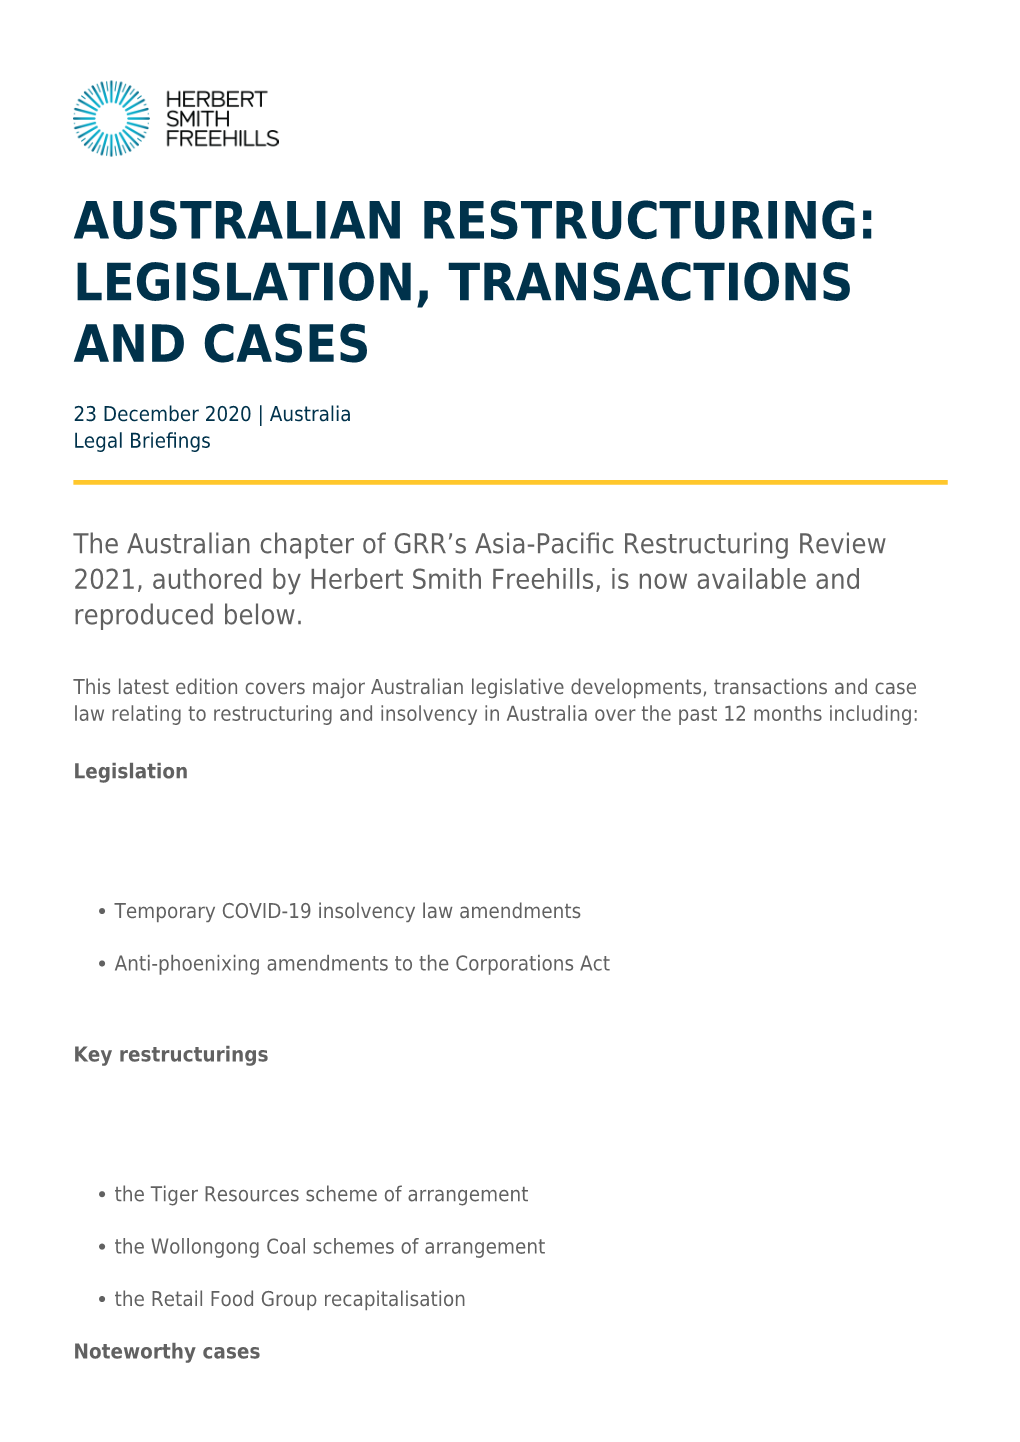 Australian Restructuring: Legislation, Transactions and Cases